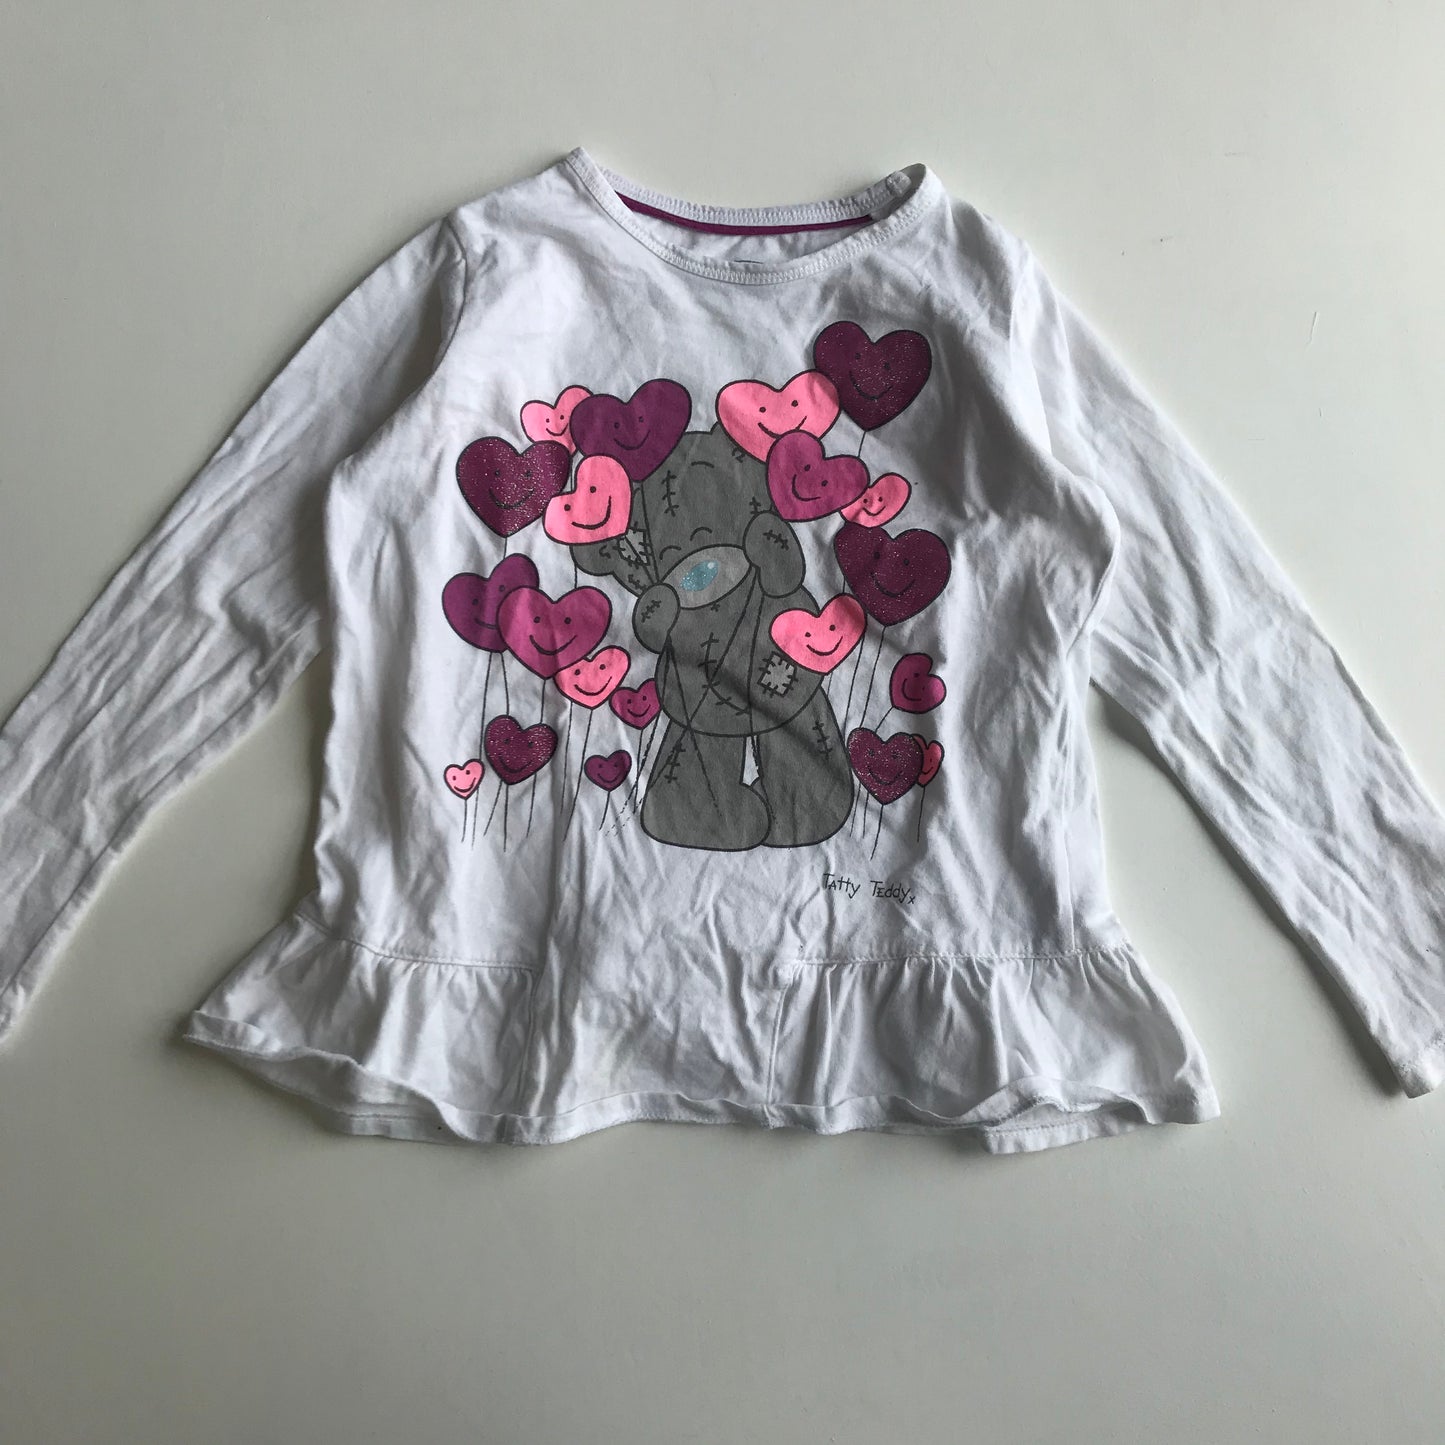 T-shirt - Teddy & Heart Balloons - Age 4